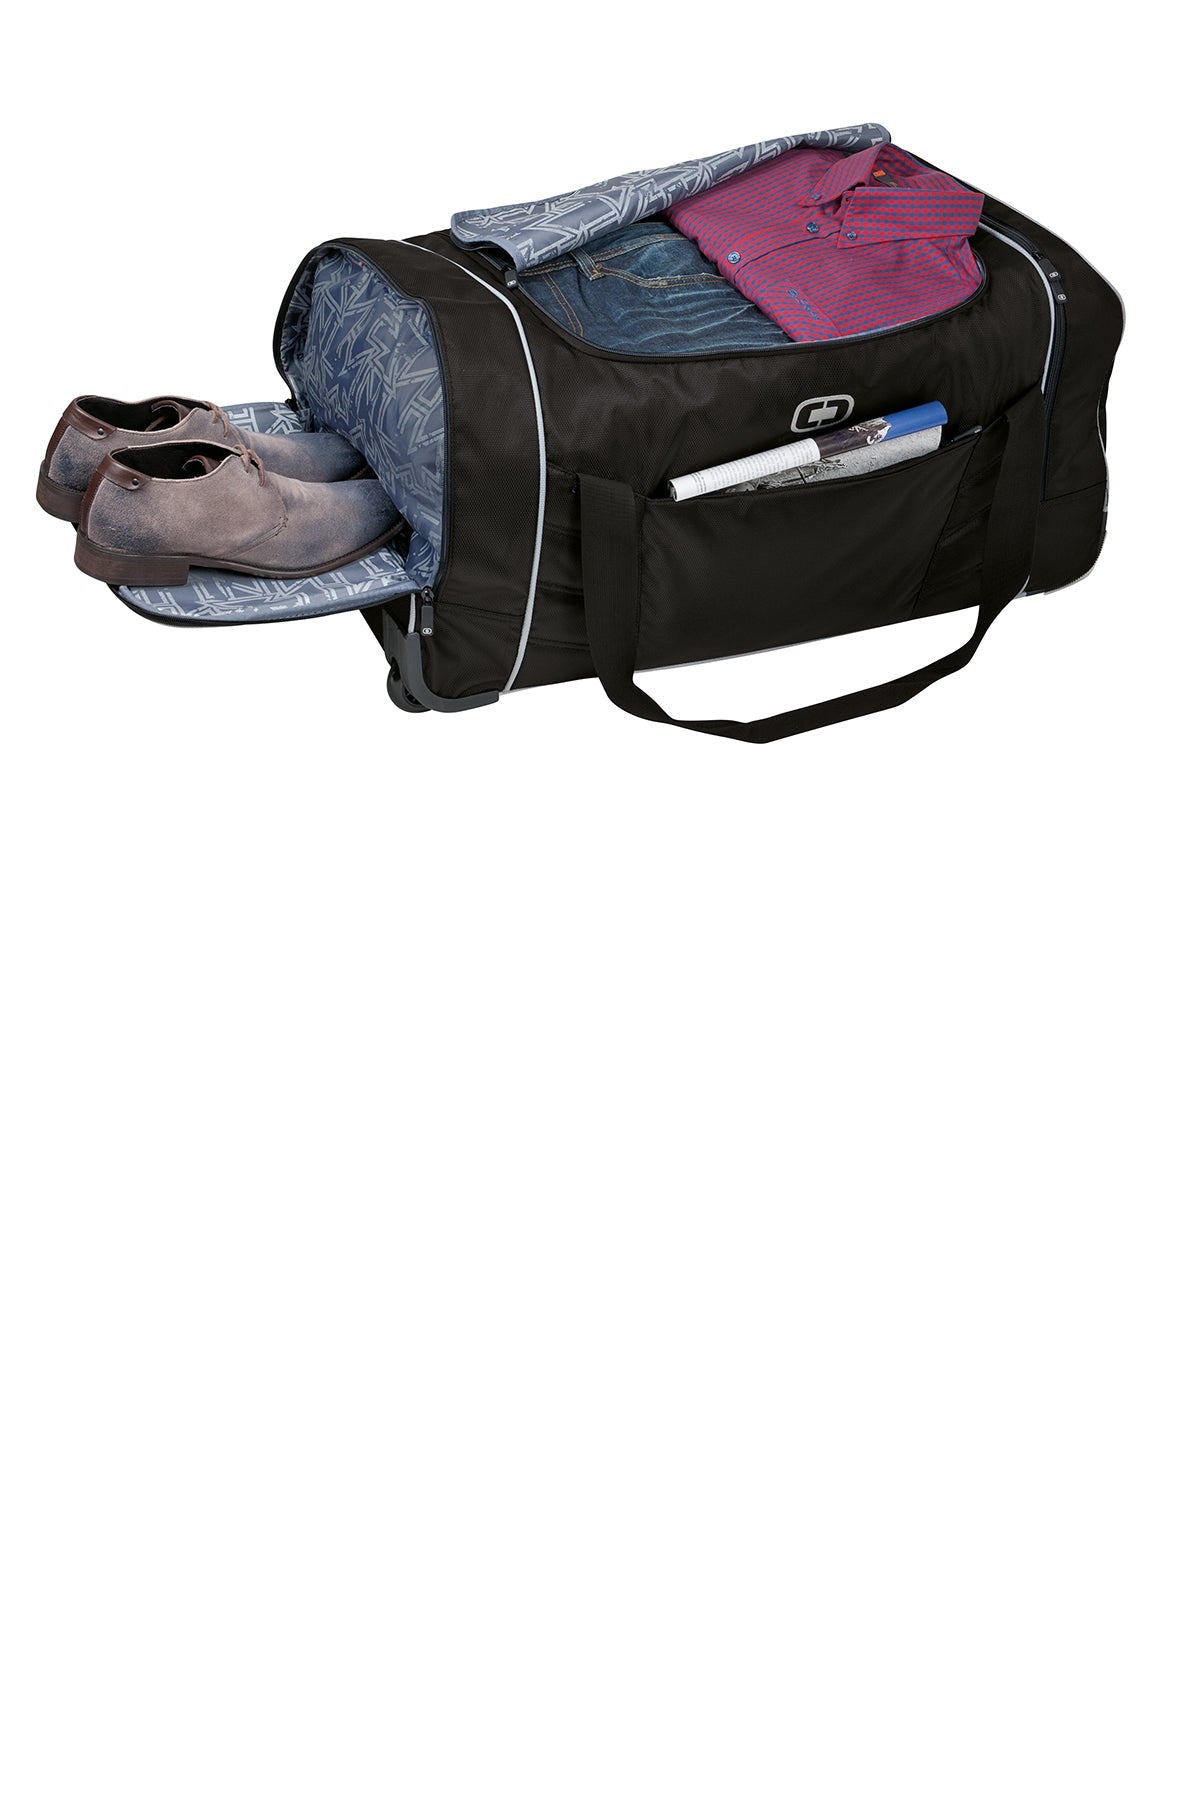 OGIO Hamblin 30 Wheeled Customized Duffel Bags, Black/ Silver